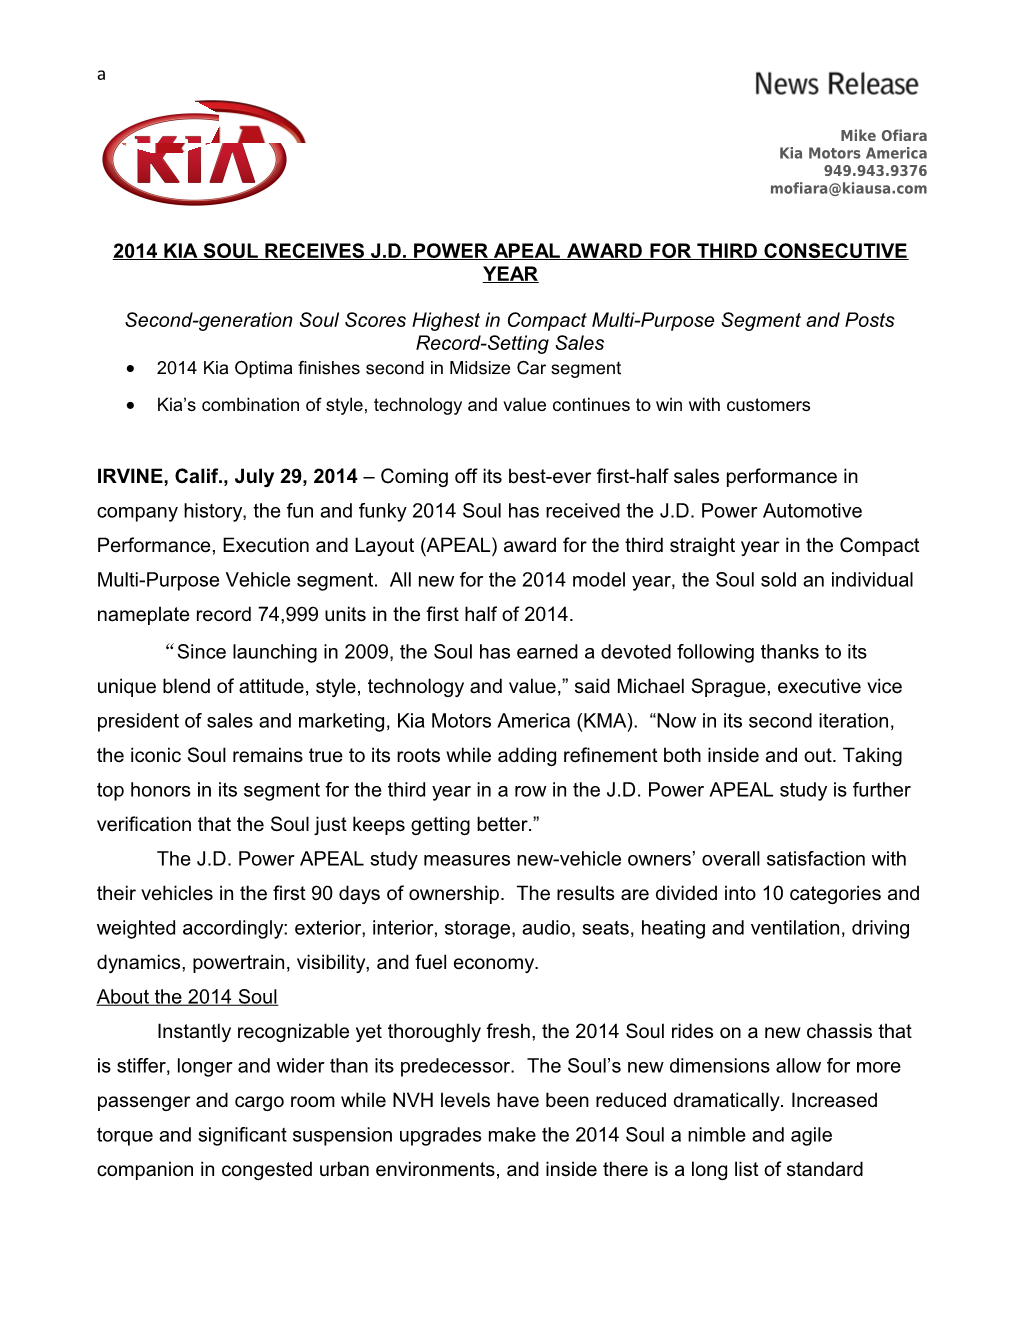 2014 Kia Soul Receives J.D. Power Apeal Award for Third Consecutive Year